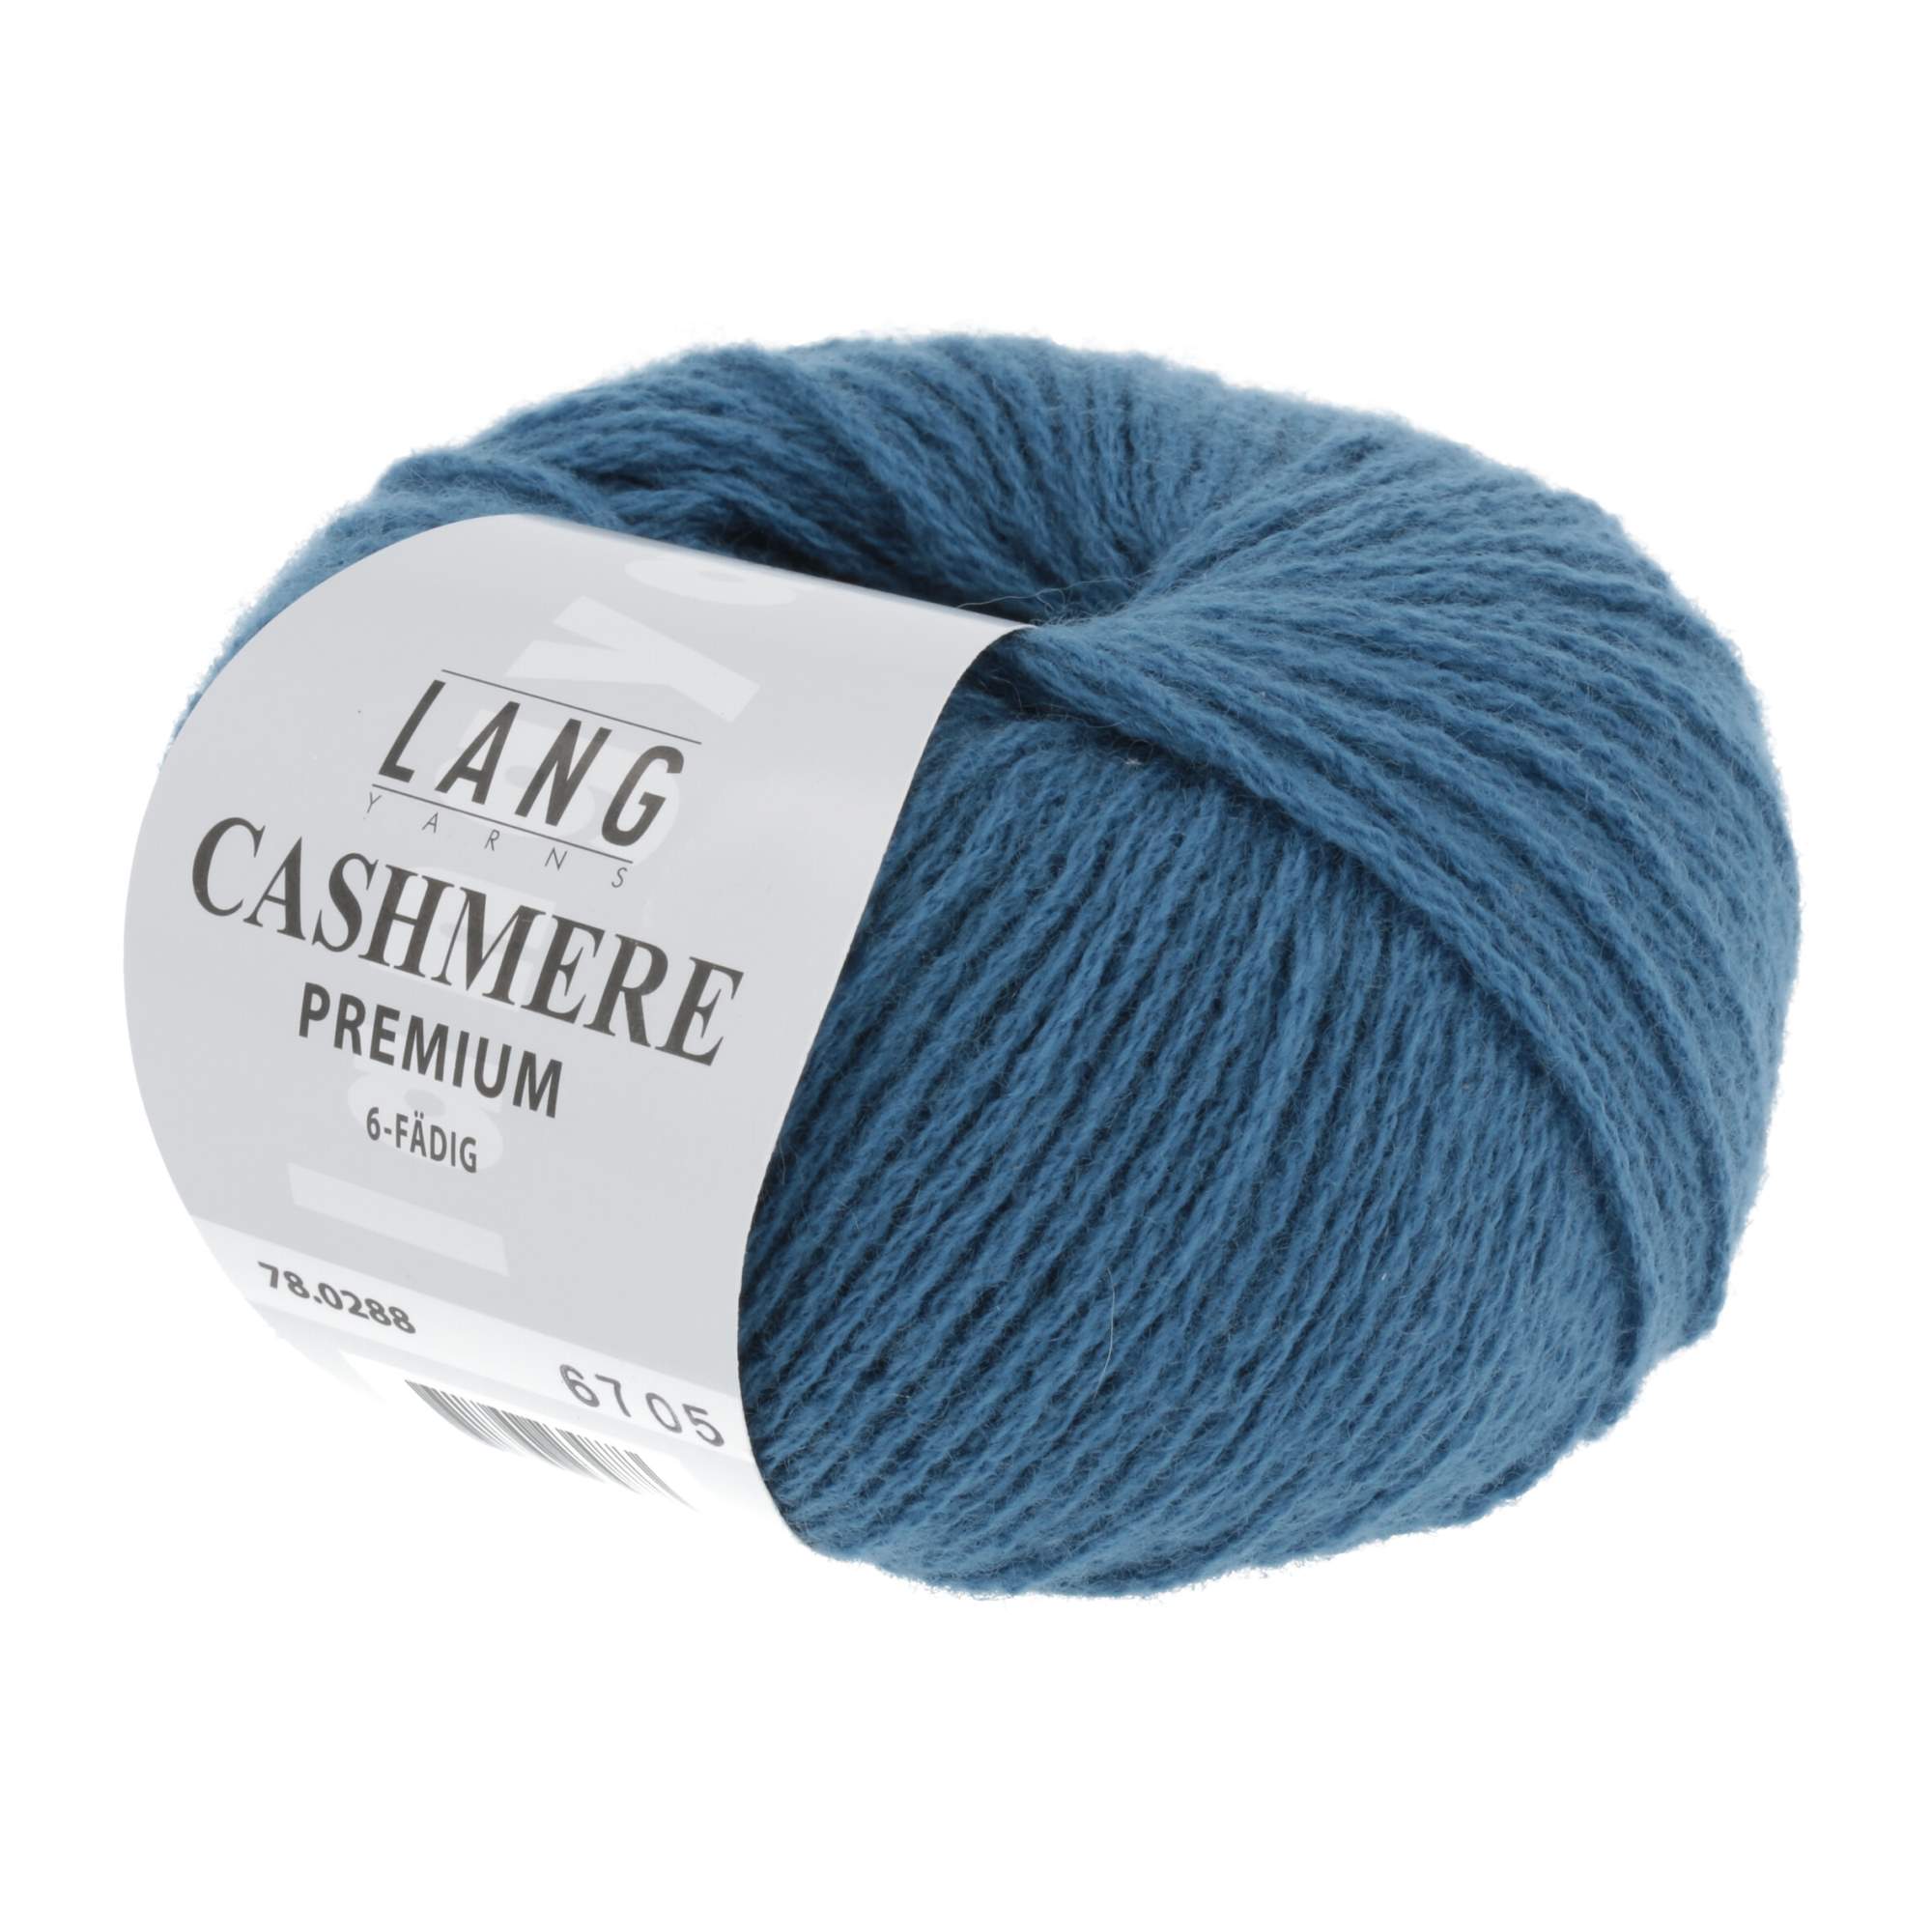 Cashmere Premium - Lang Yarns